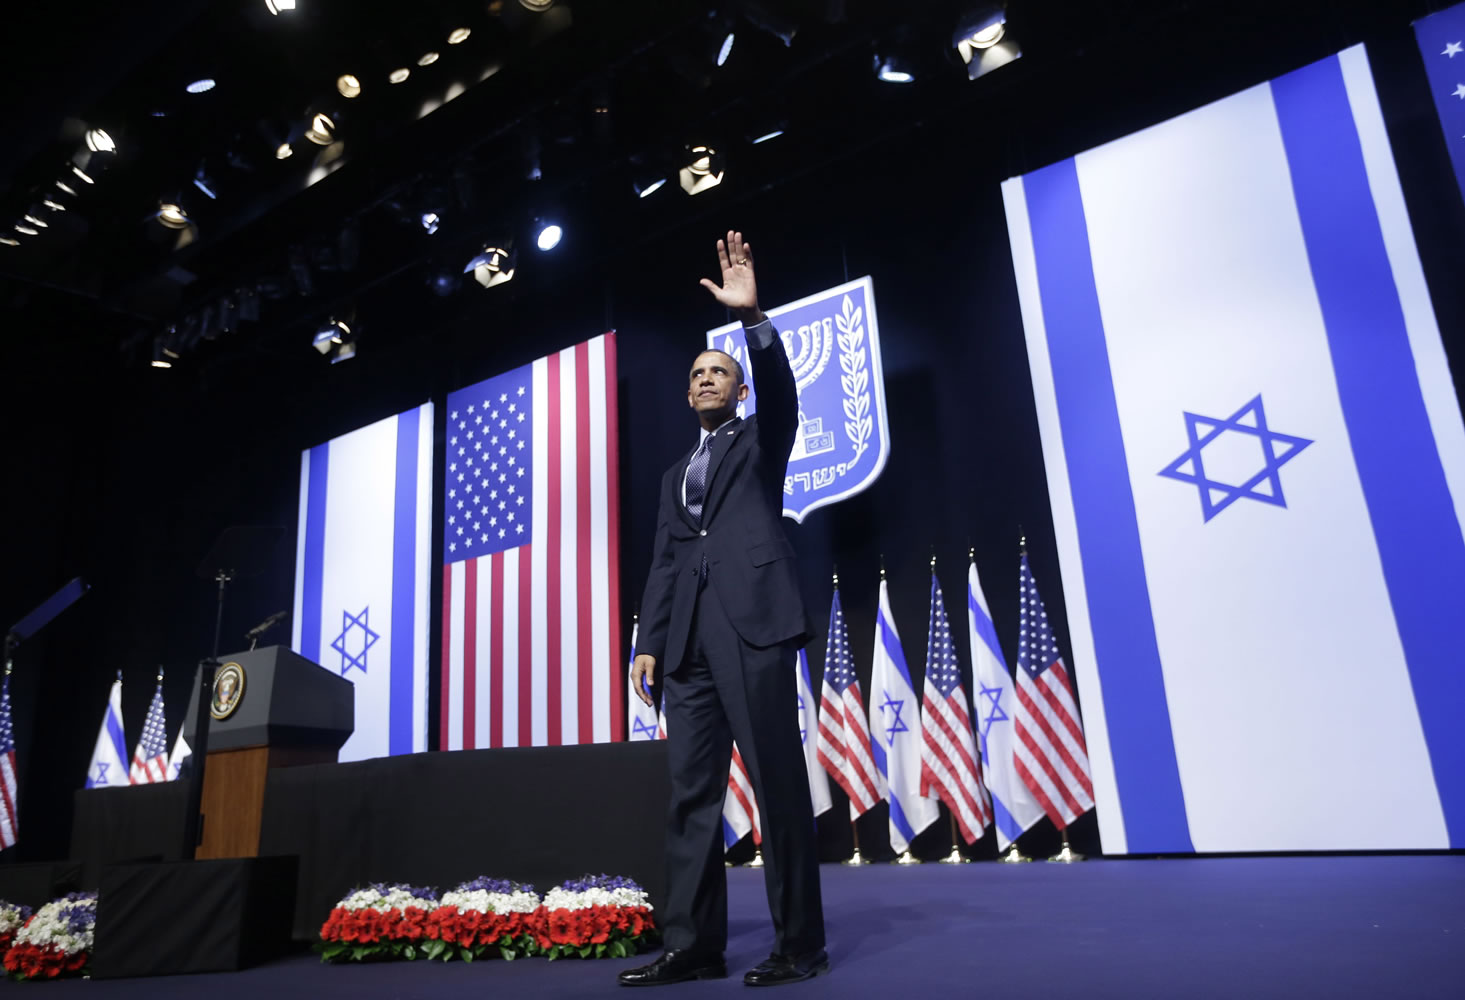 President Barack Obama waves to the crowd after speaking at the Jerusalem Convention Center in Jerusalem, Israel, on Thursday.